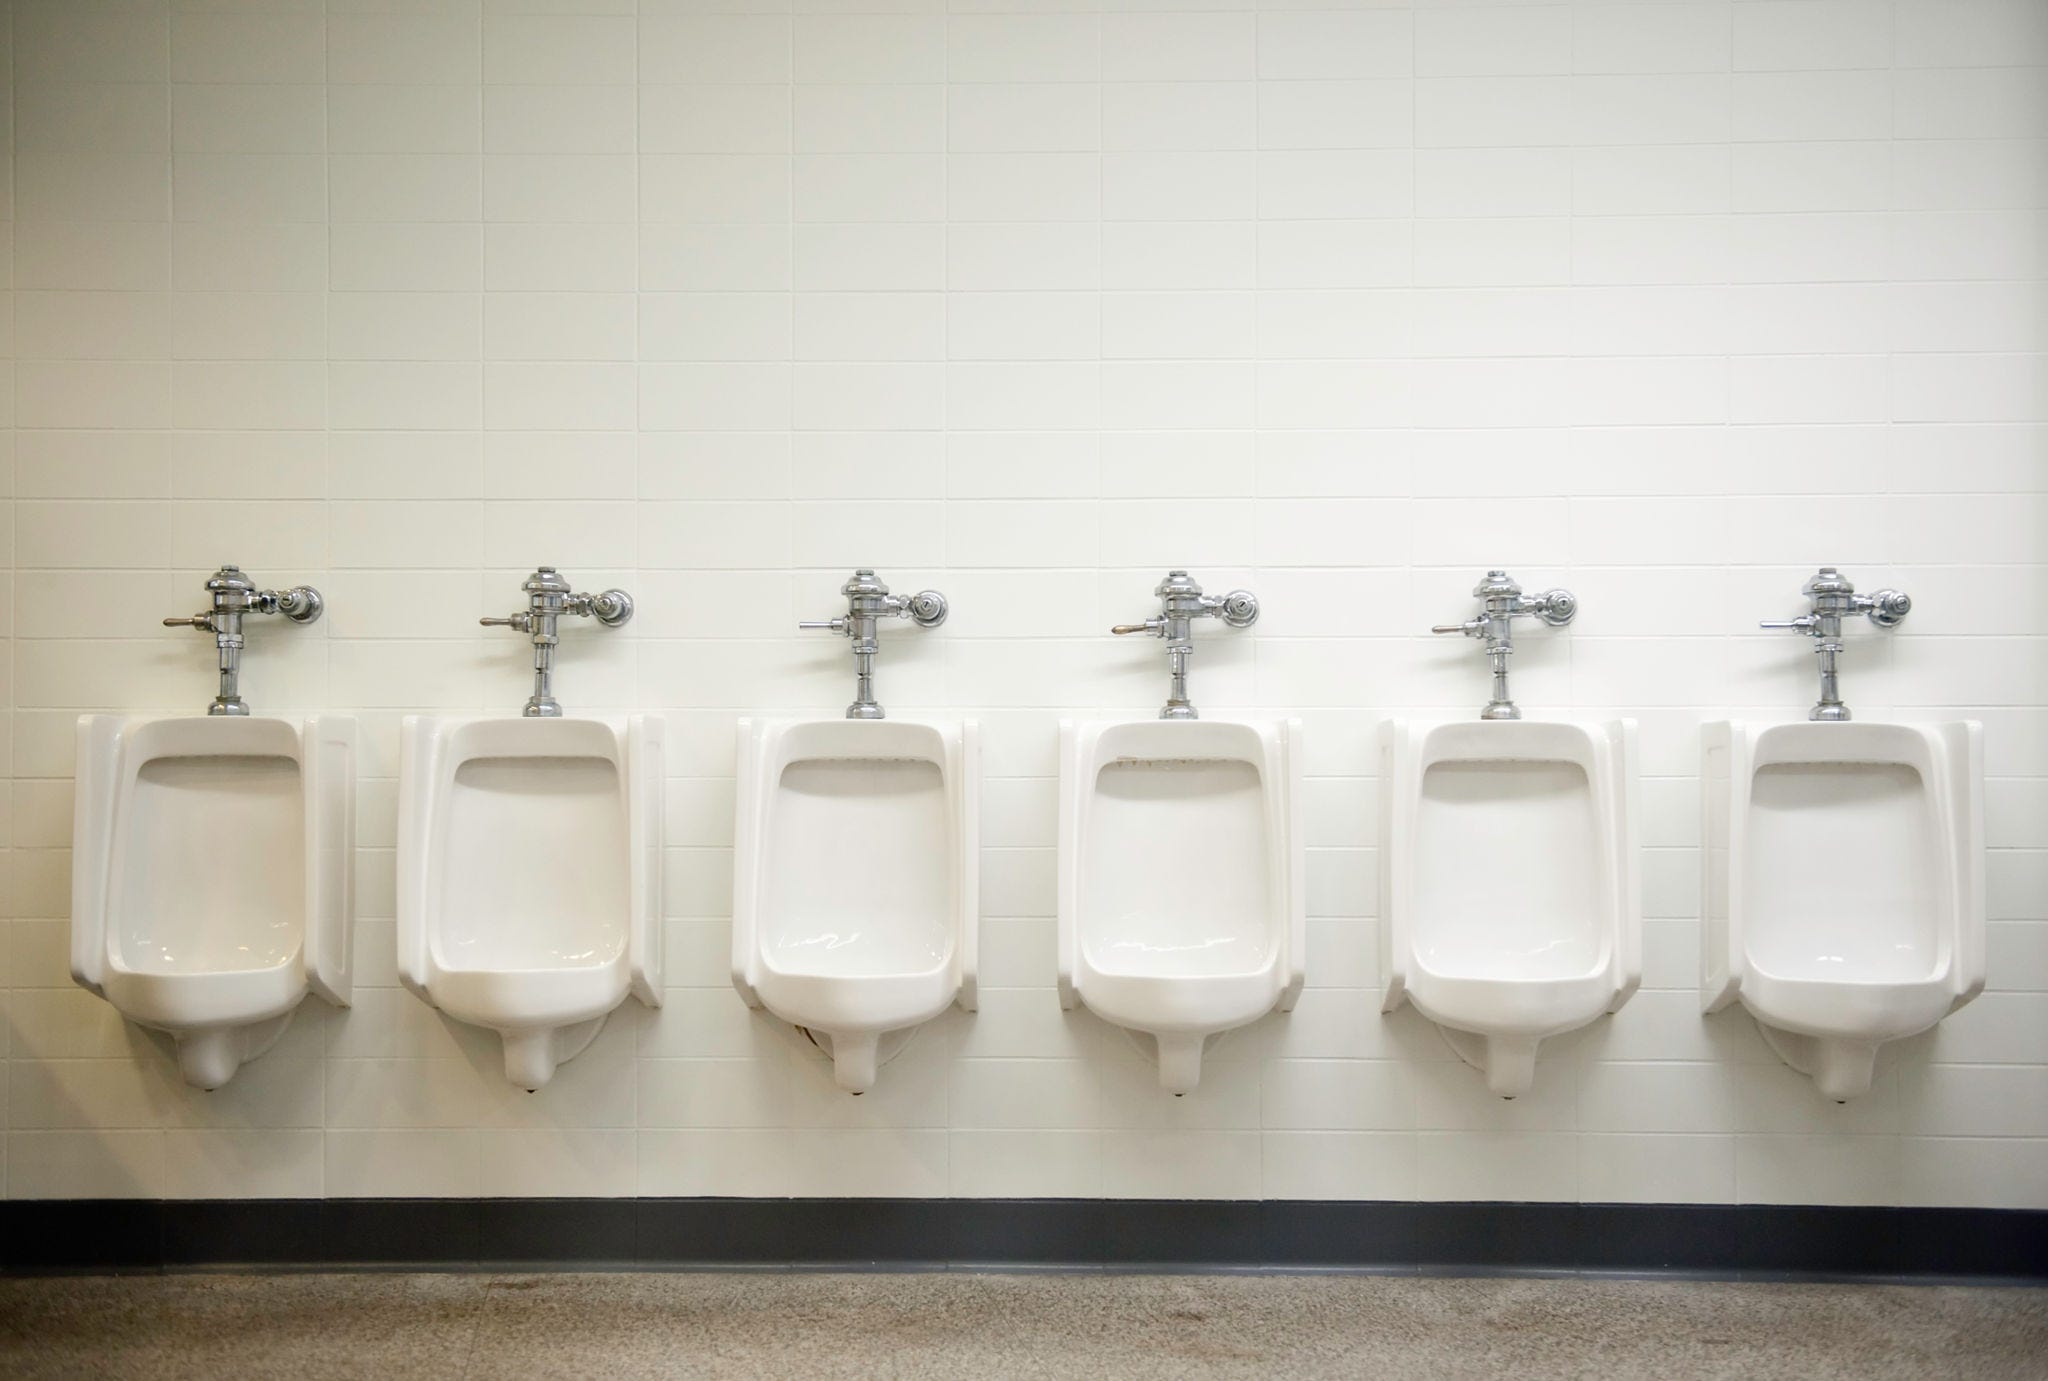 A row of six urinals await customers.